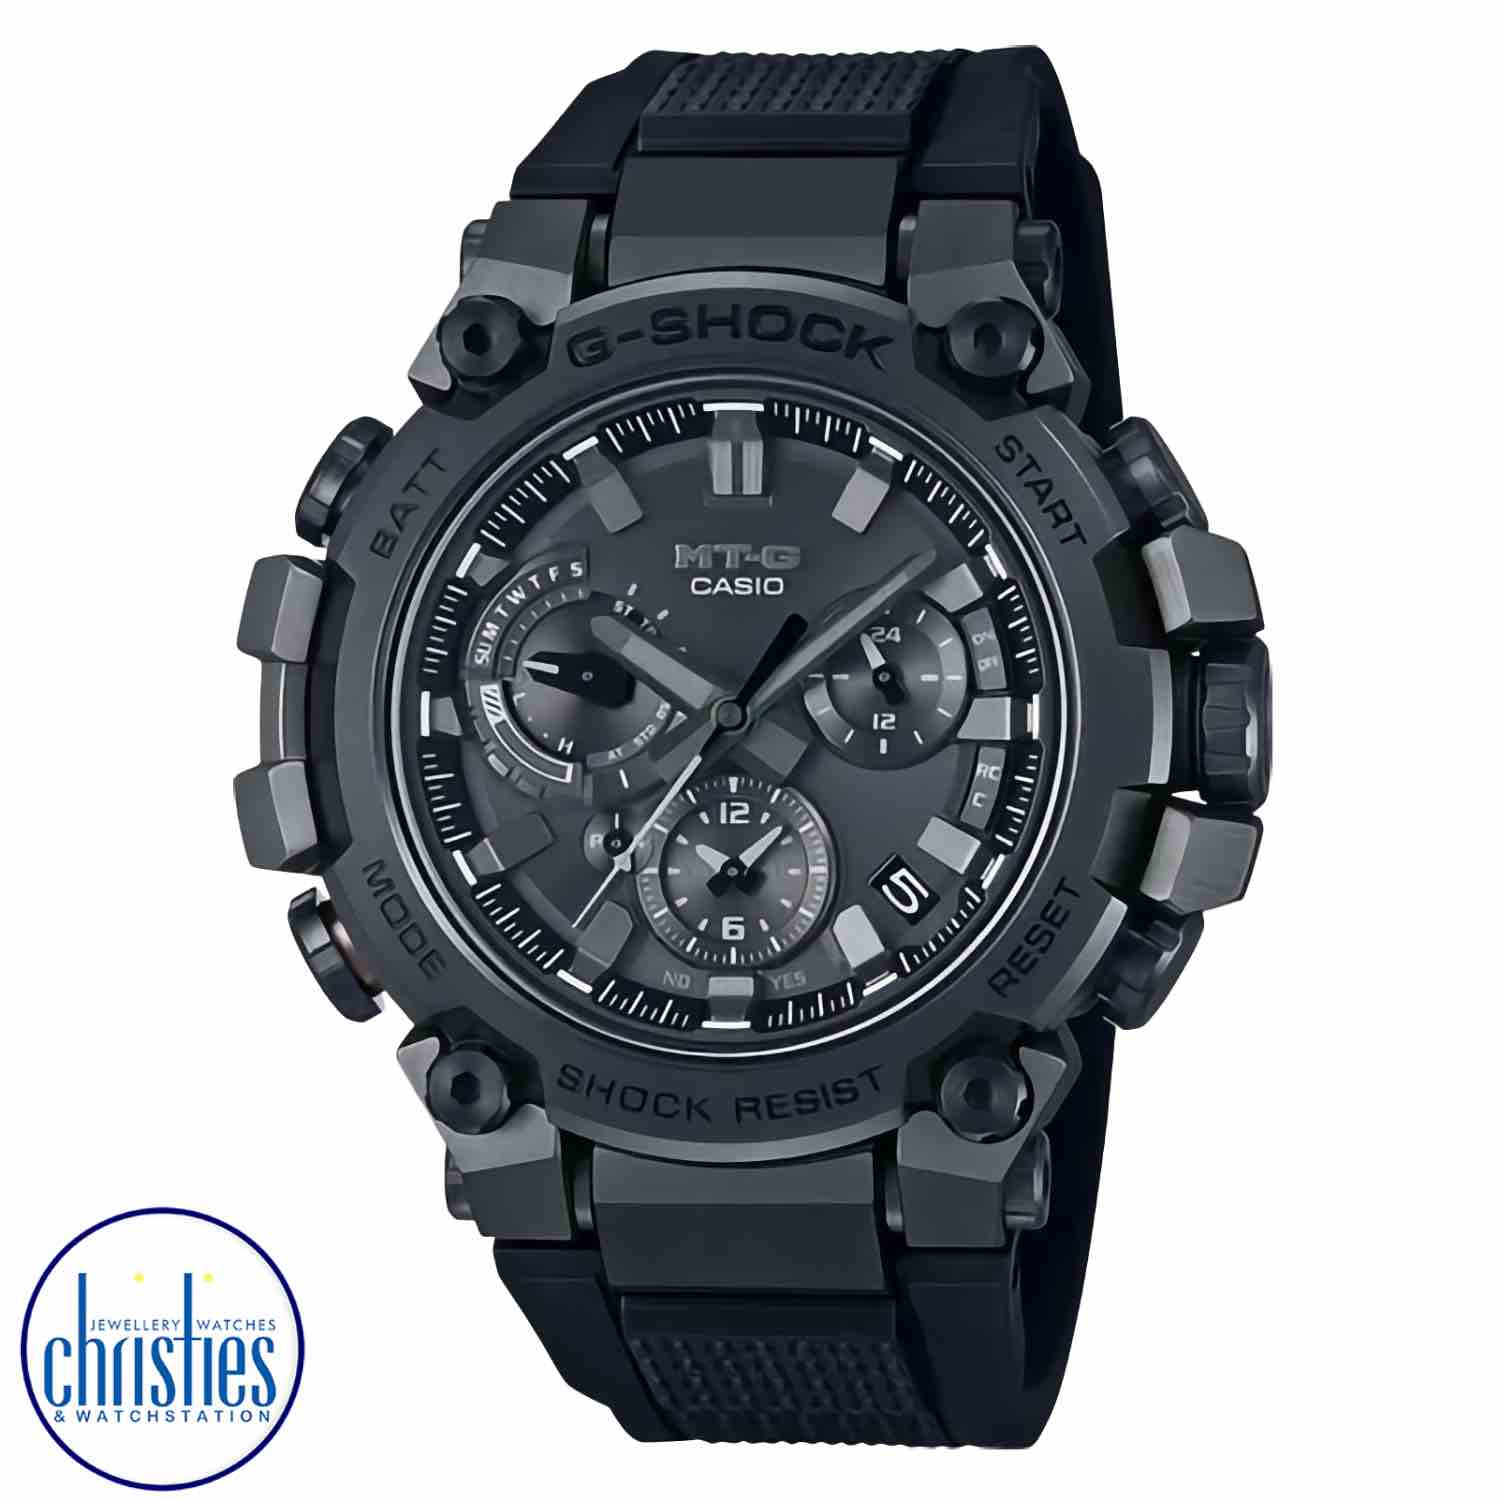 MTGB3000B-1A G-Shock Bluetooth Tough Solar Watch cheap casio watches nz